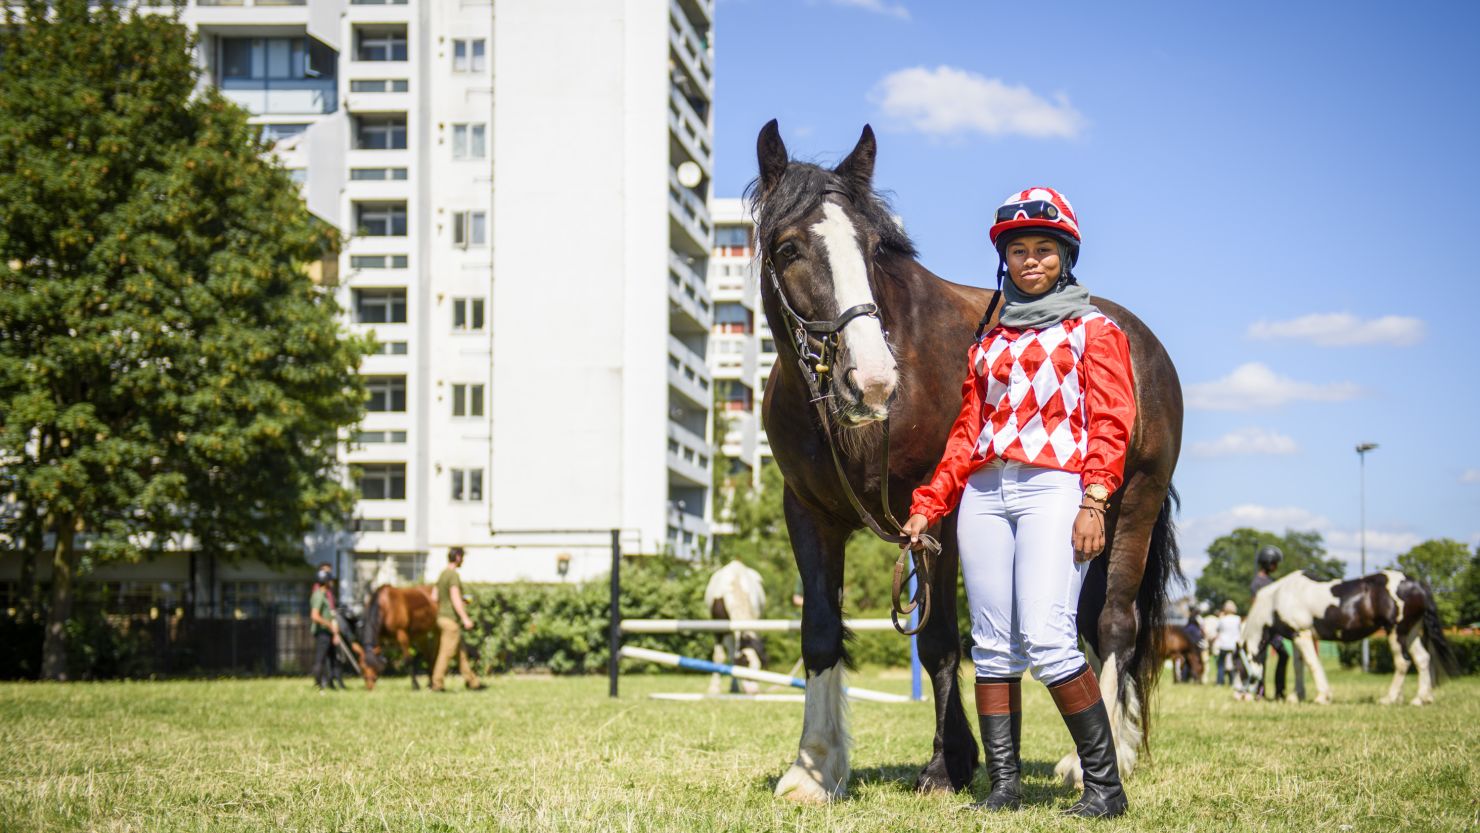 Khadijah Mellah learned to ride at the Ebony Horse Club in Brixton, south London.